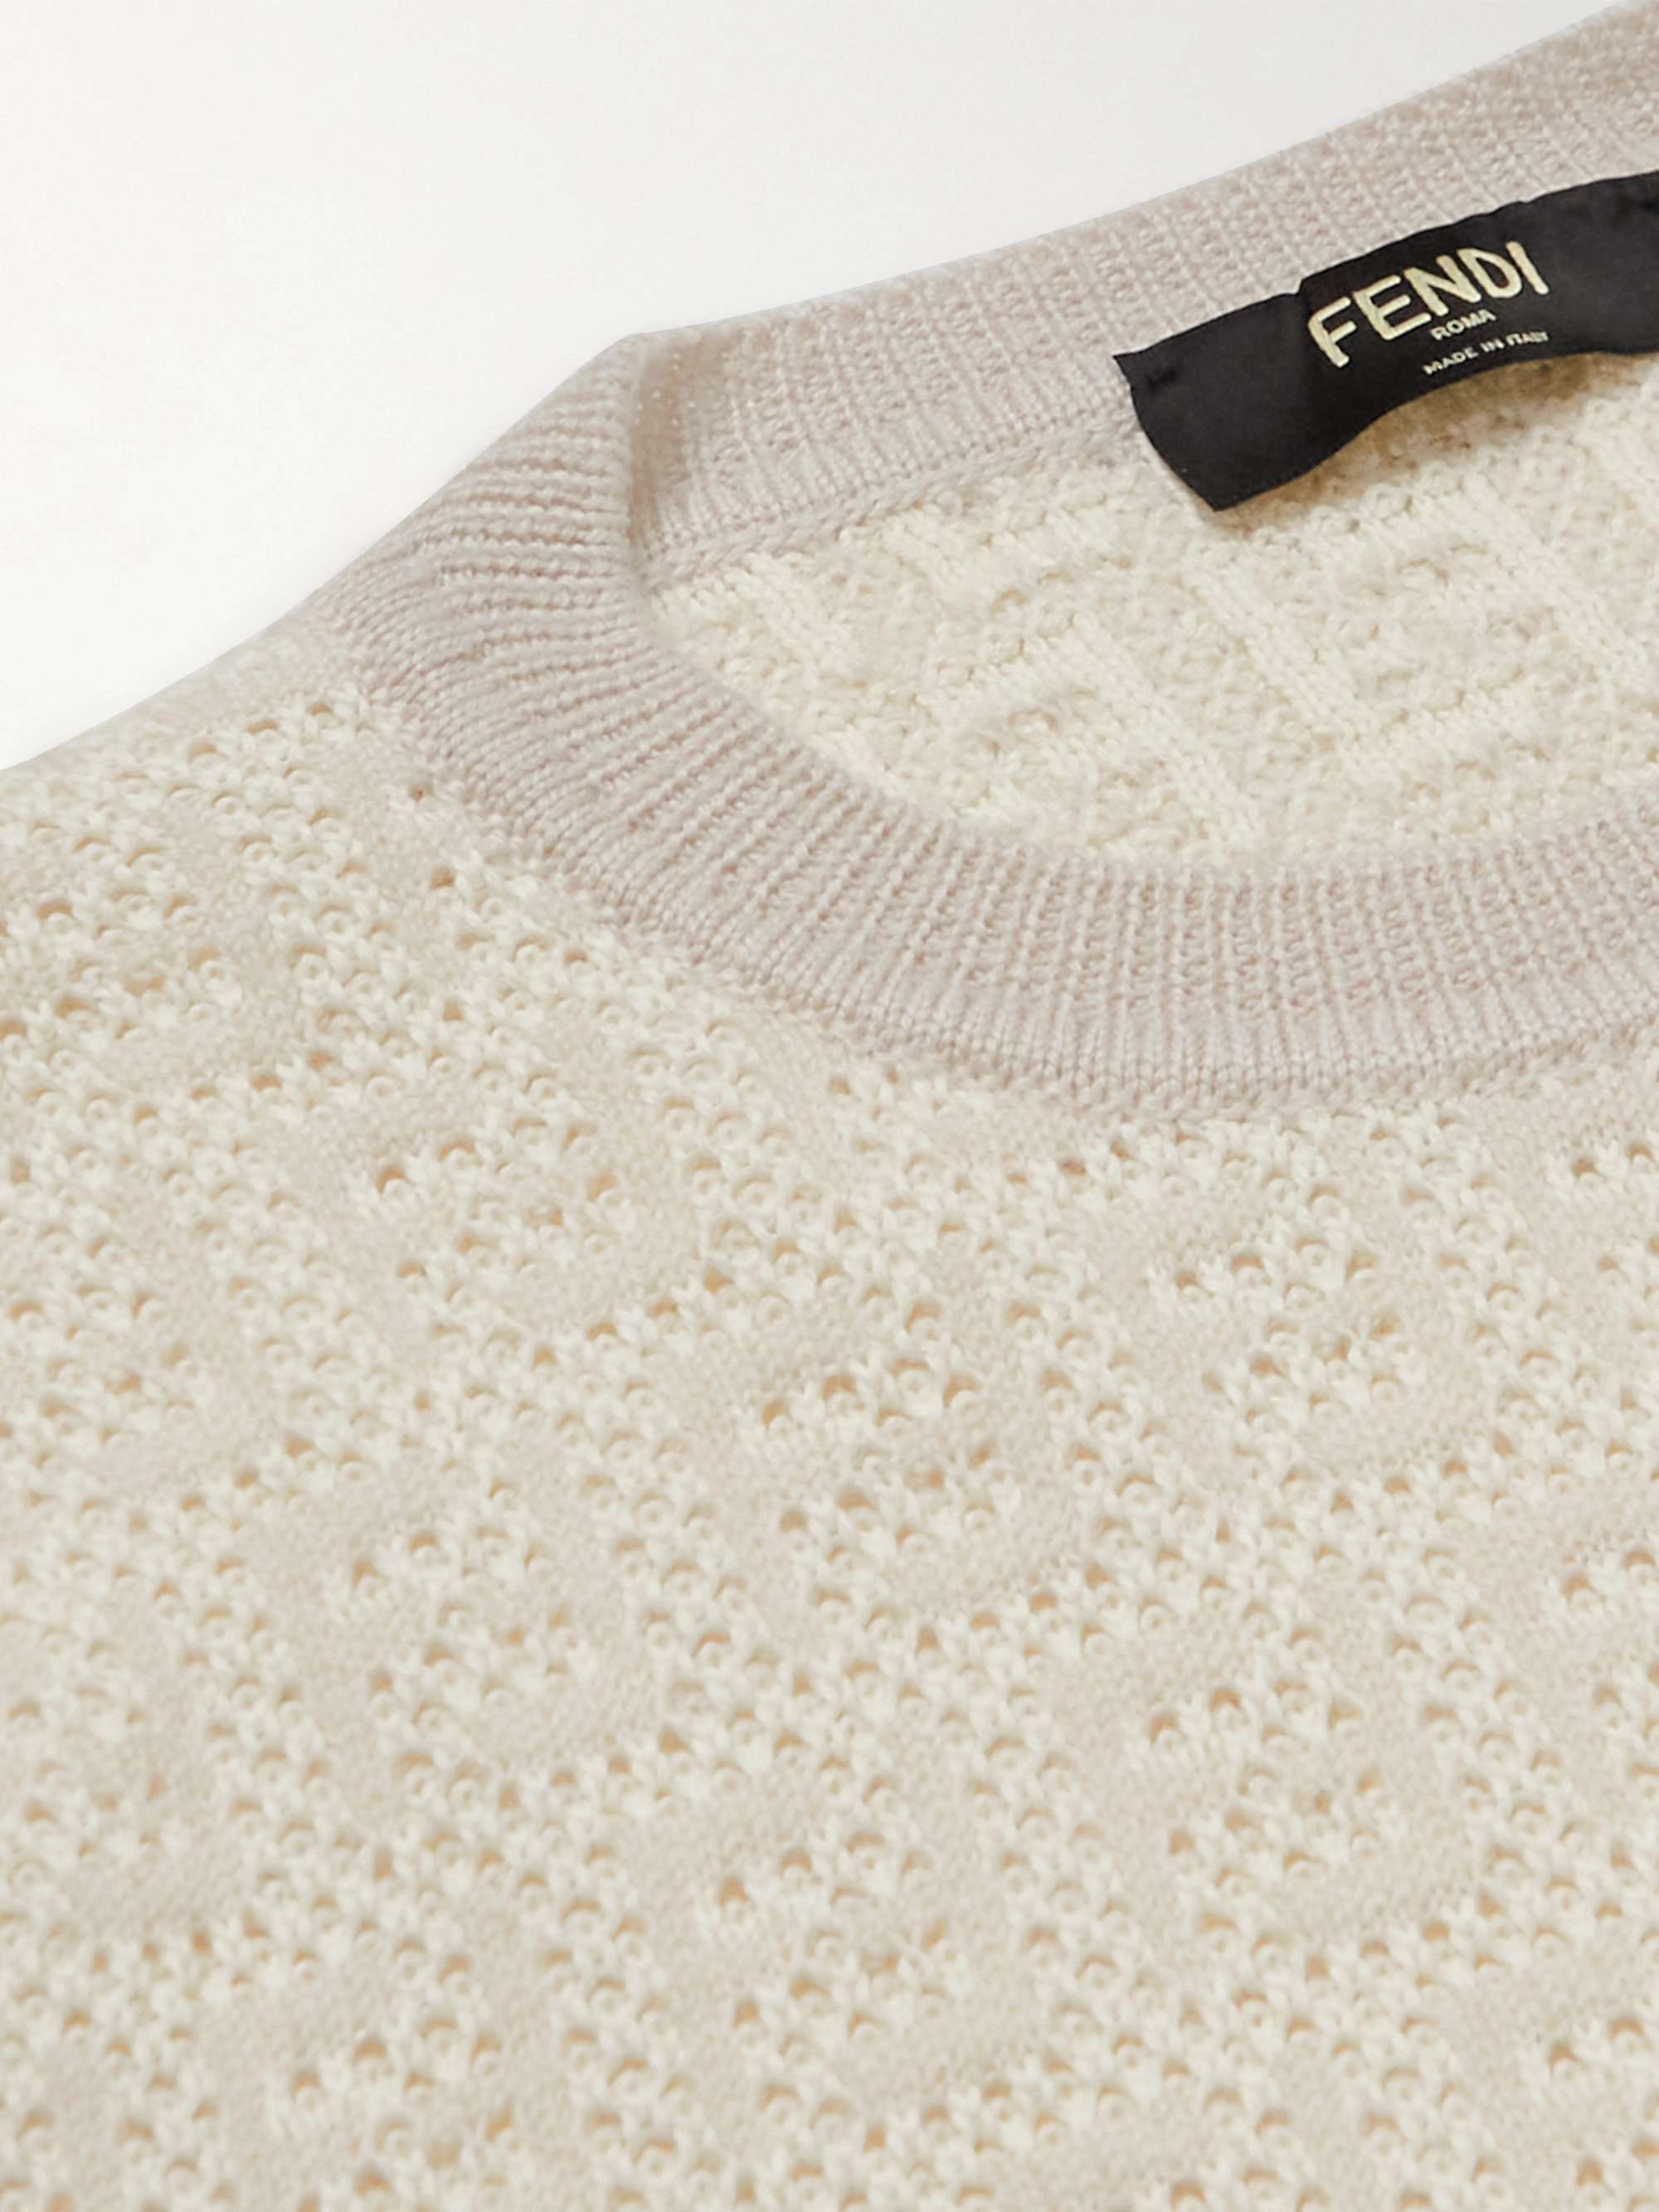 FENDI Logo-Intarsia Wool, Cotton and Cashmere-Blend Sweater